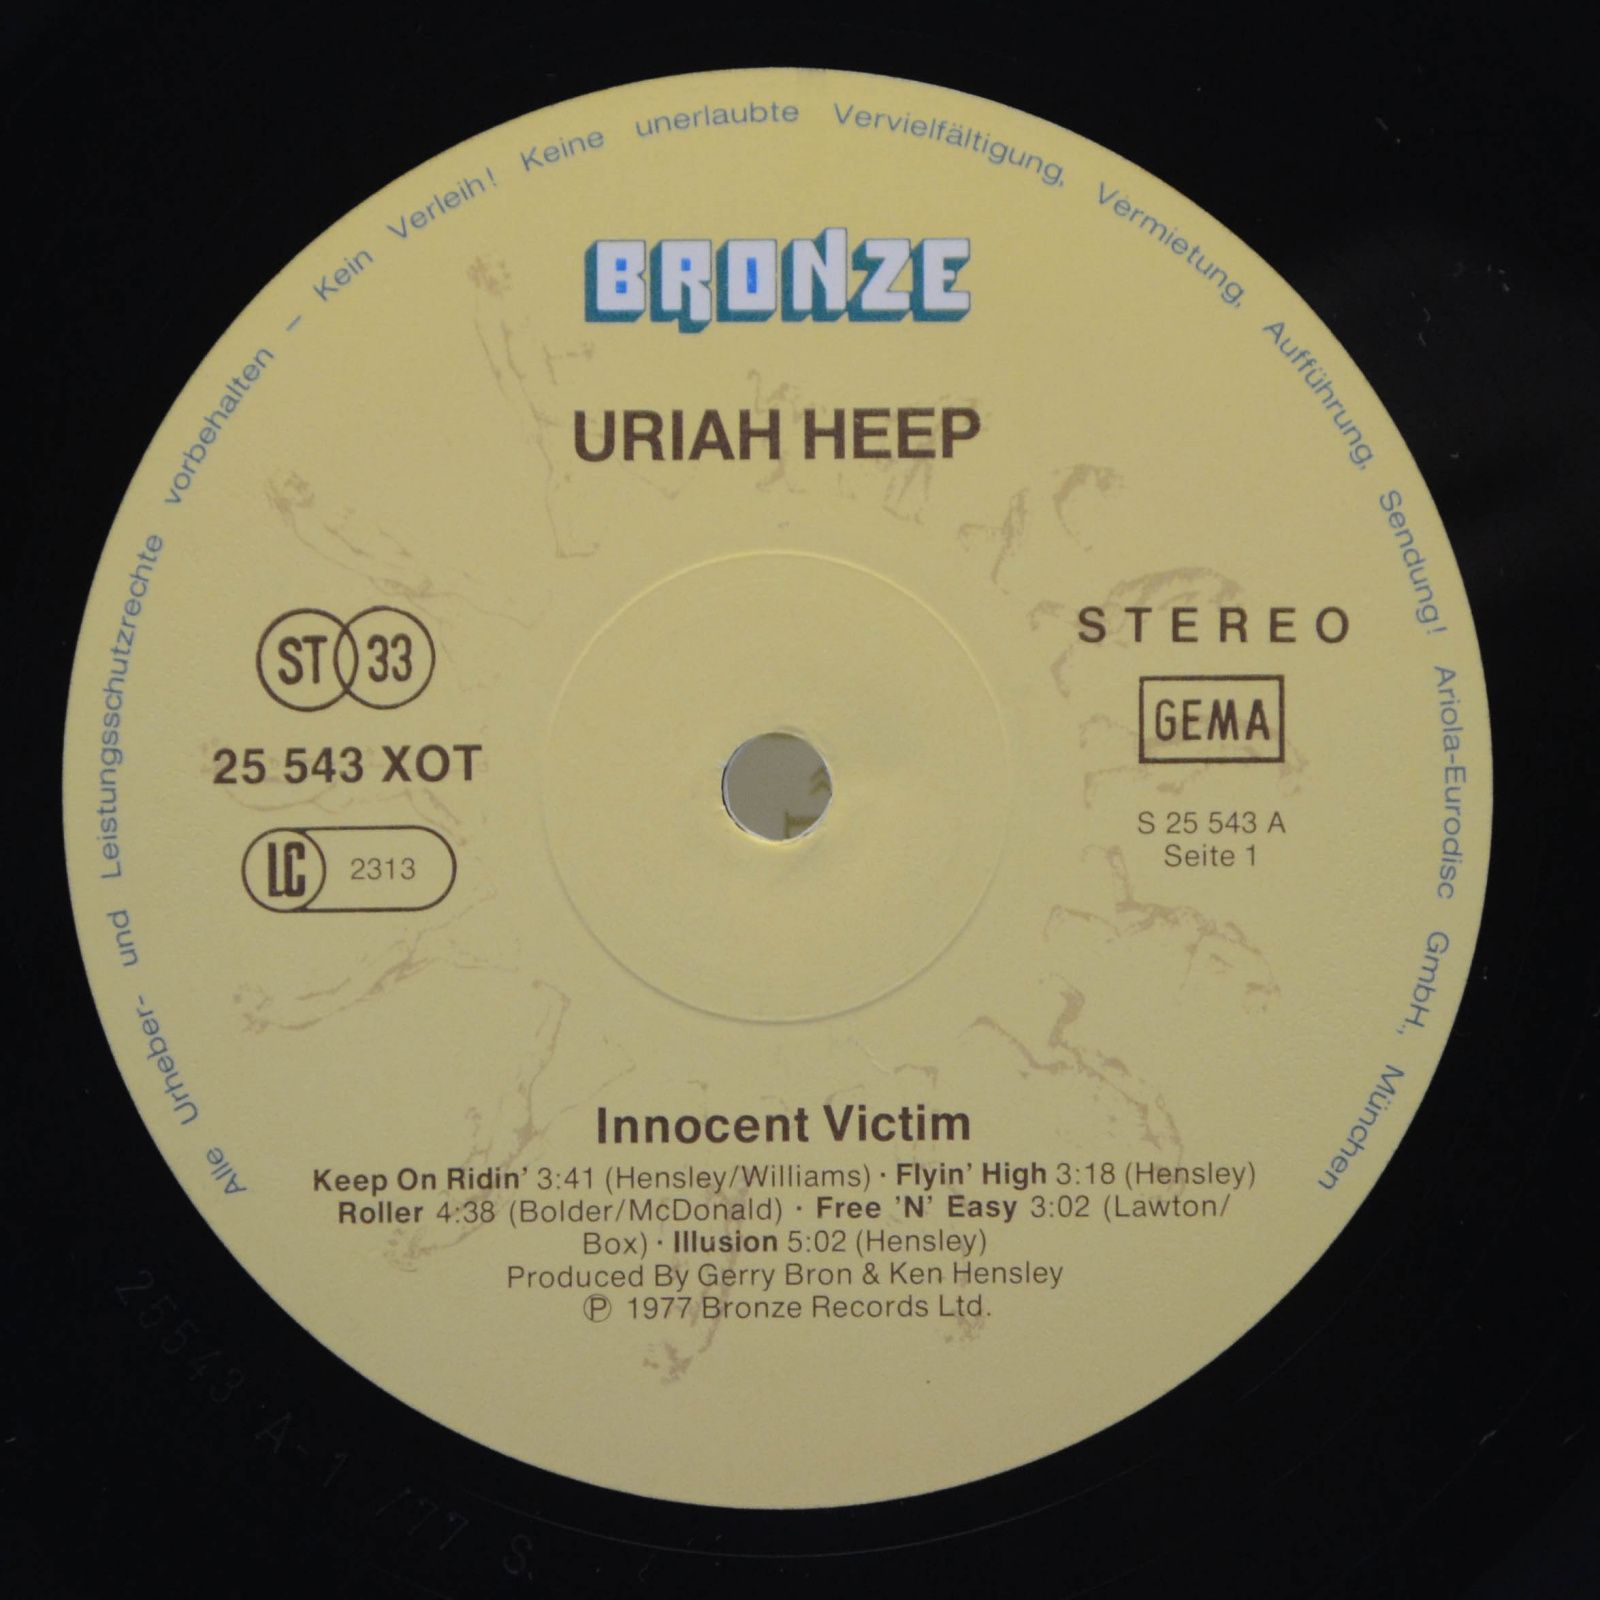 Uriah Heep — Innocent Victim, 1977